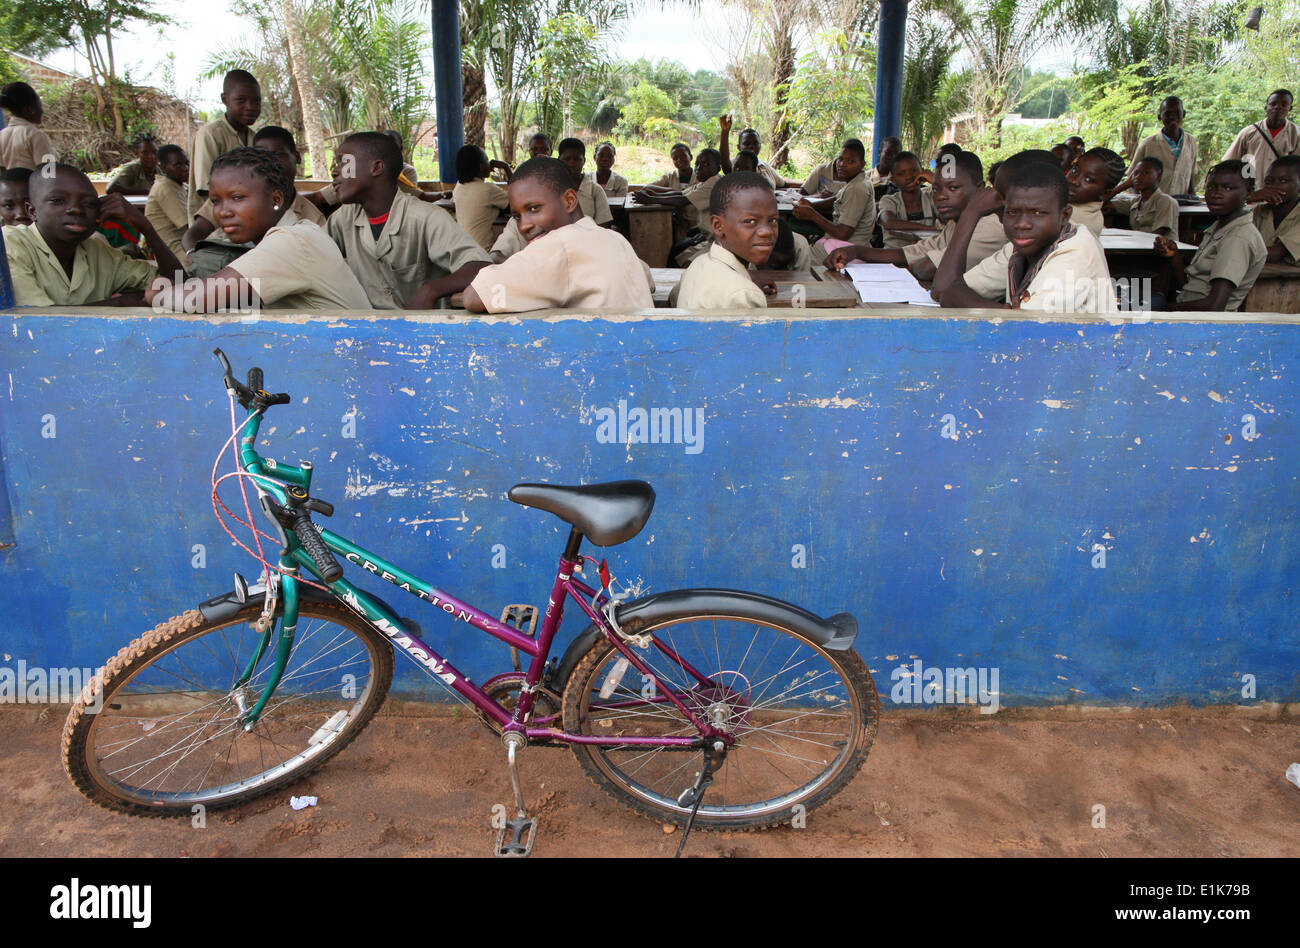 Secondary school in Africa. Stock Photo